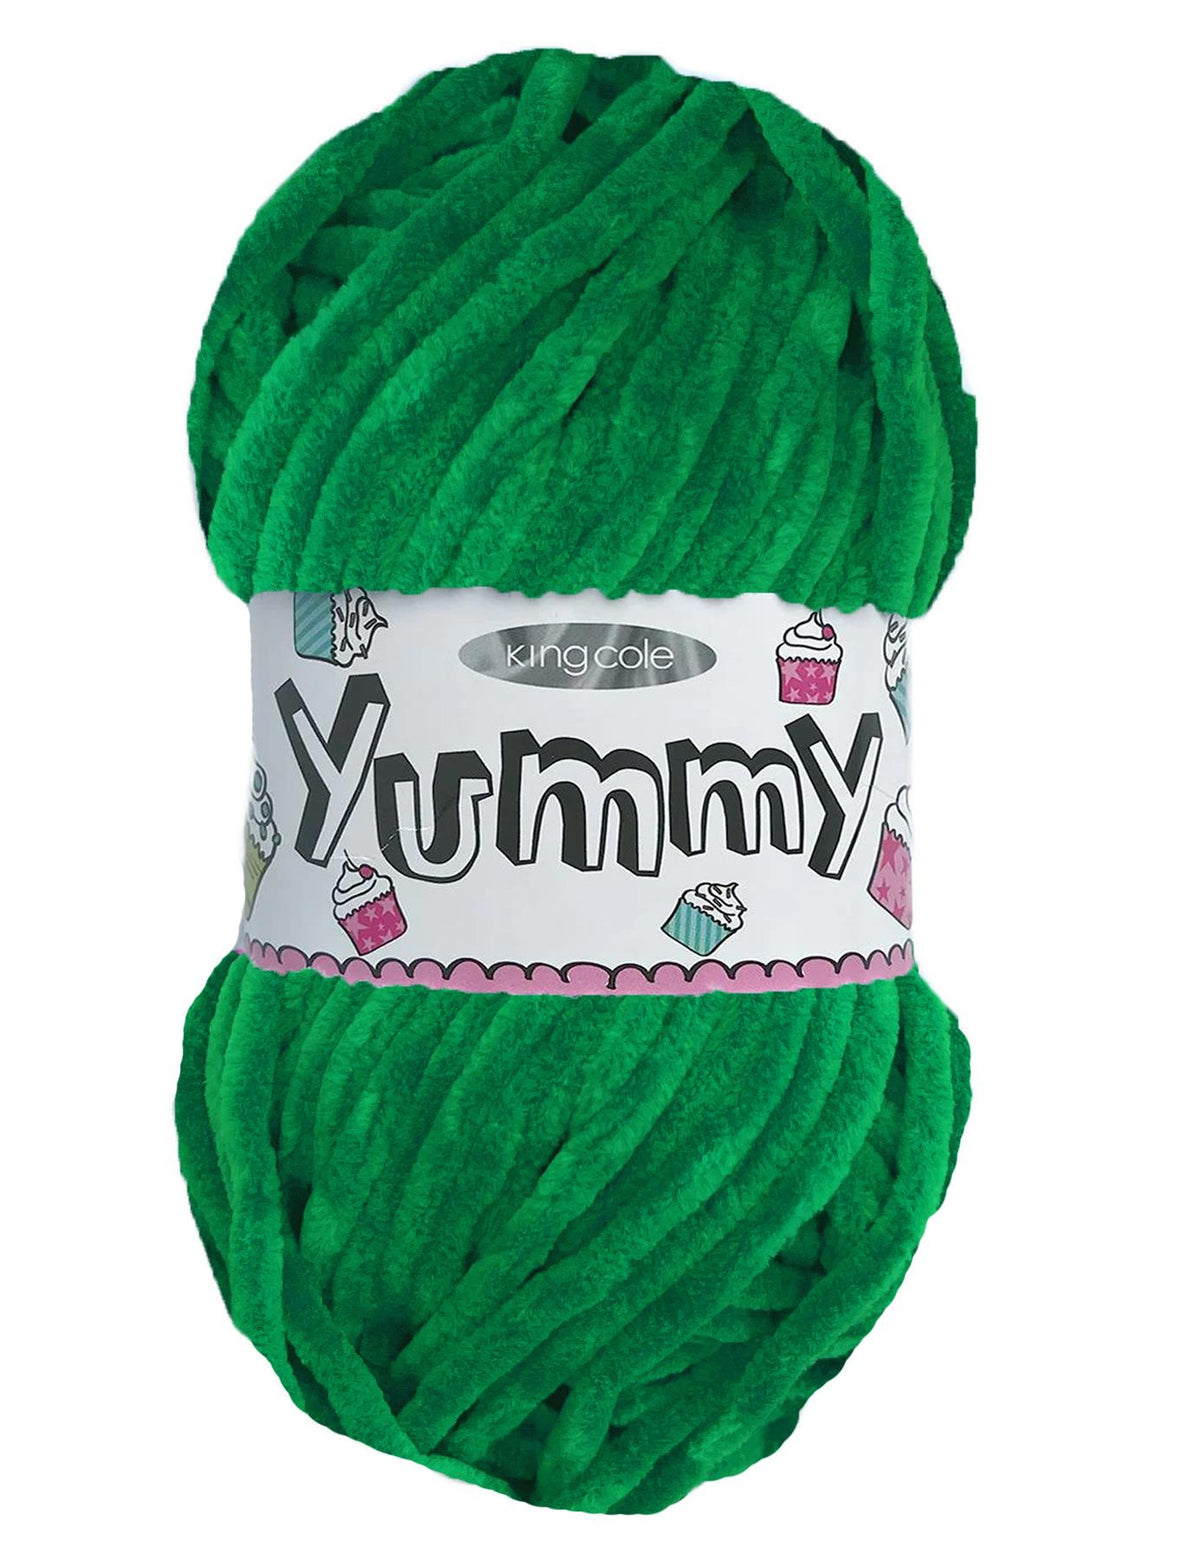 King Cole Yummy Green (4750) chenille yarn - 100g